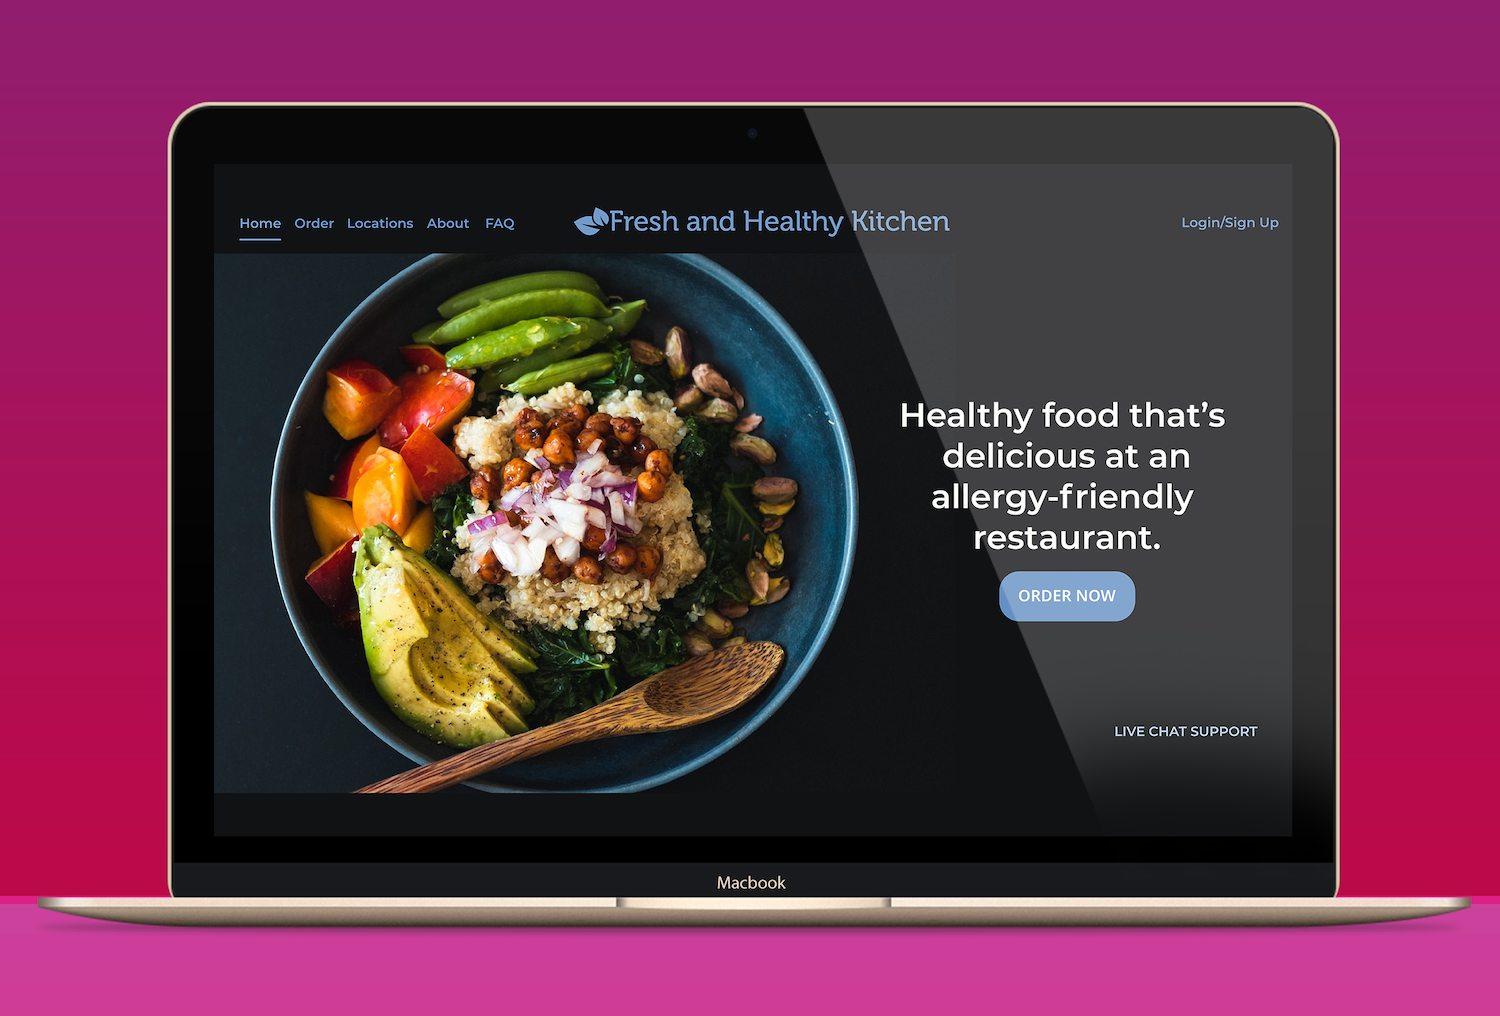 Mockup of a restaurant website designed by Chris Olson.